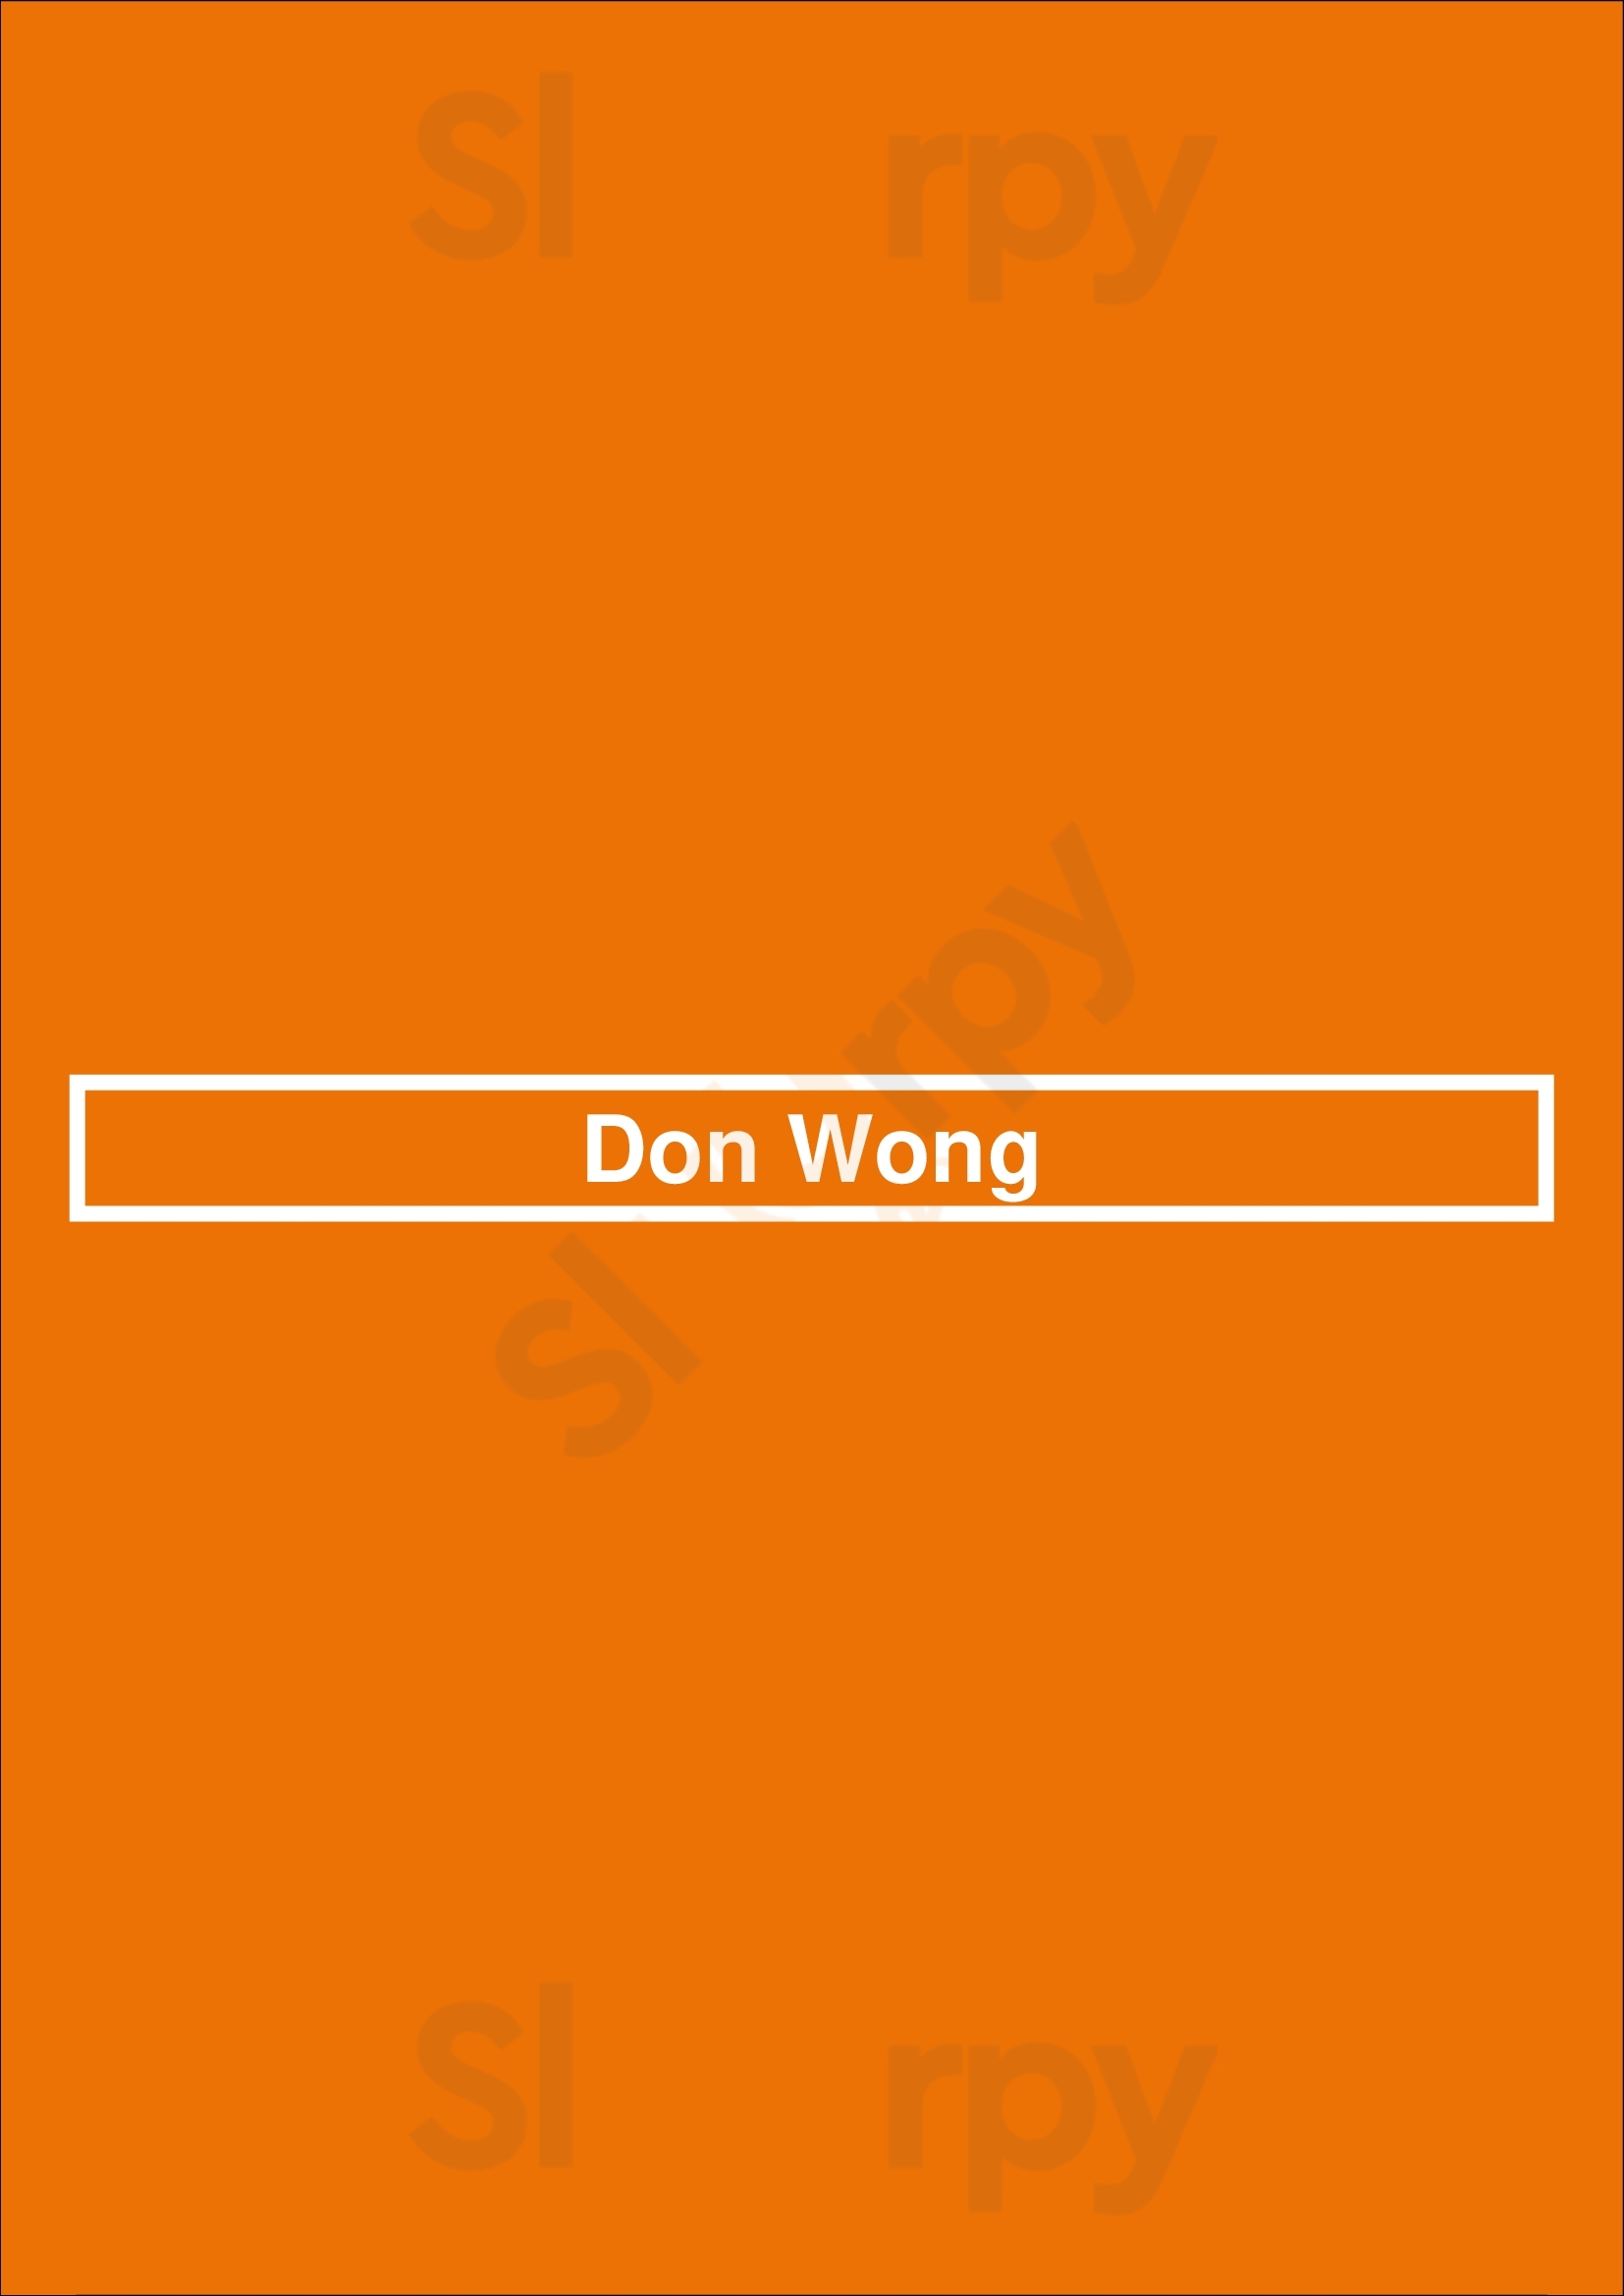 Don Wong Niagara Falls Menu - 1